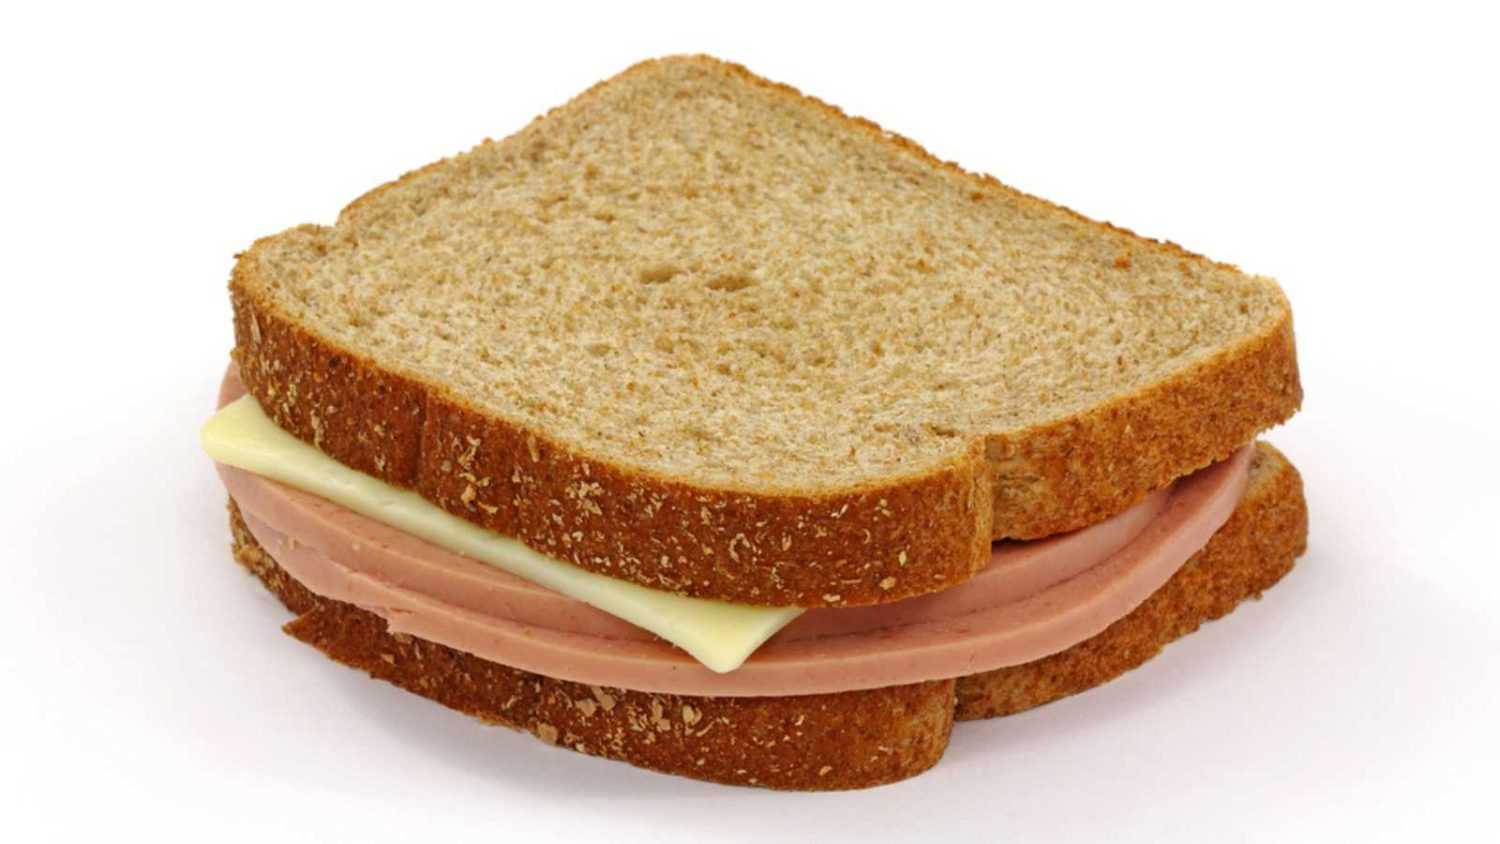 Bologna sandwich